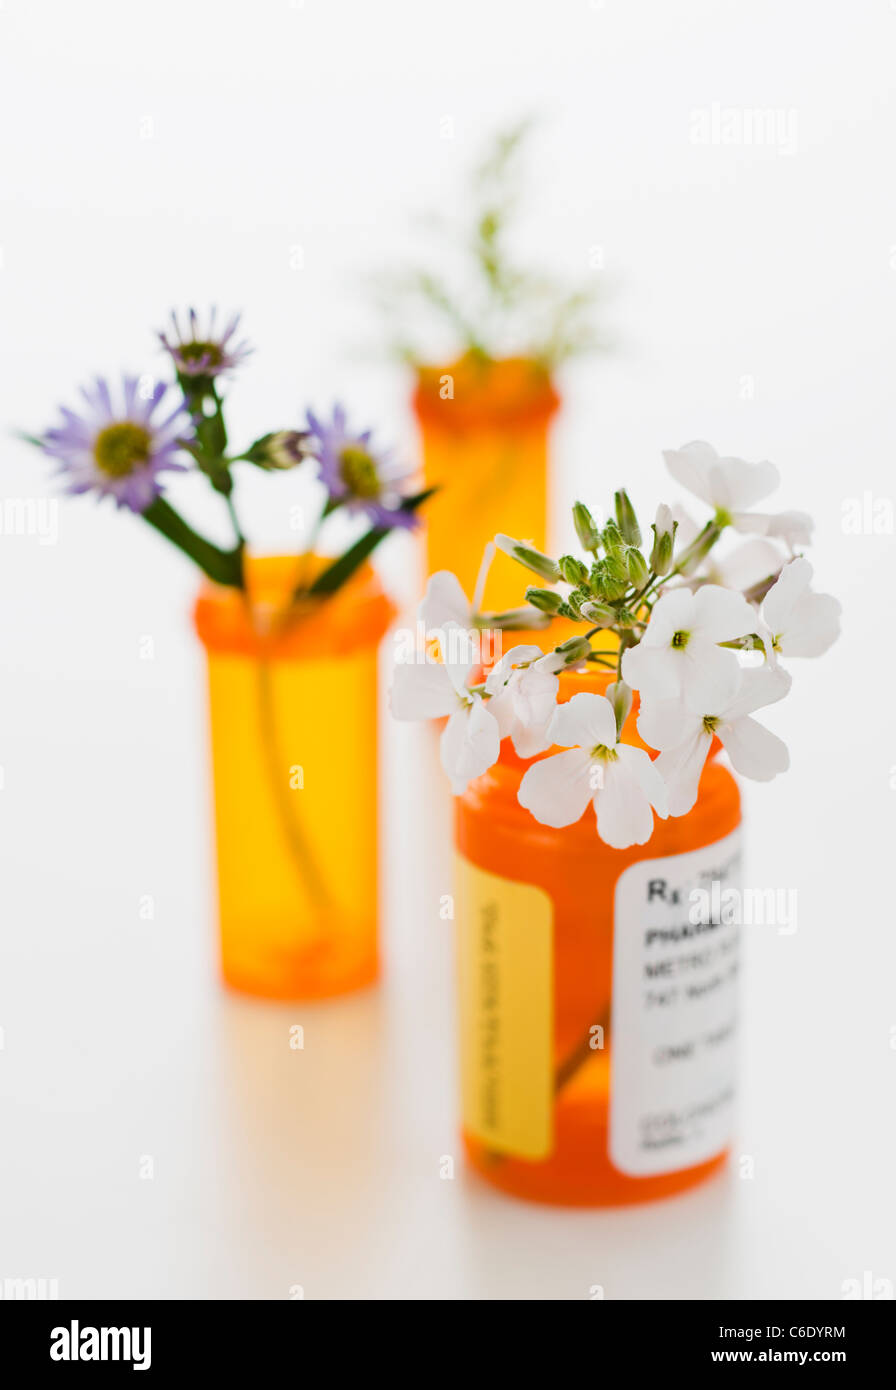 Herbal medicine bottles Stock Photo